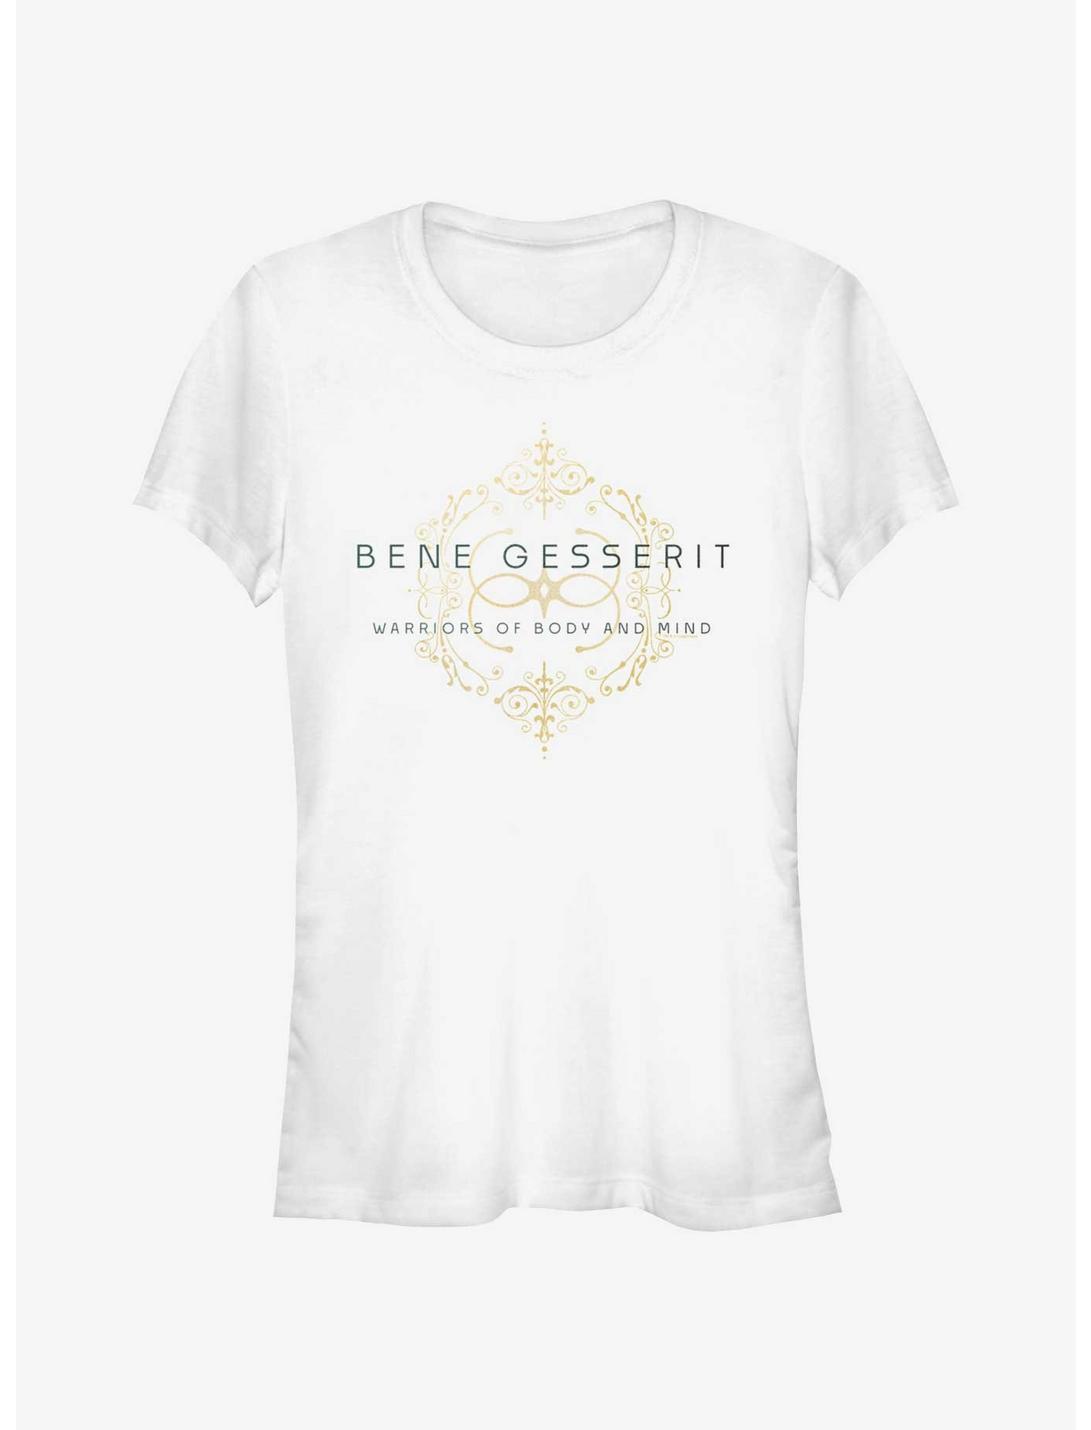 Dune: Part Two Bene Gesserit Sigil Girls T-Shirt, WHITE, hi-res